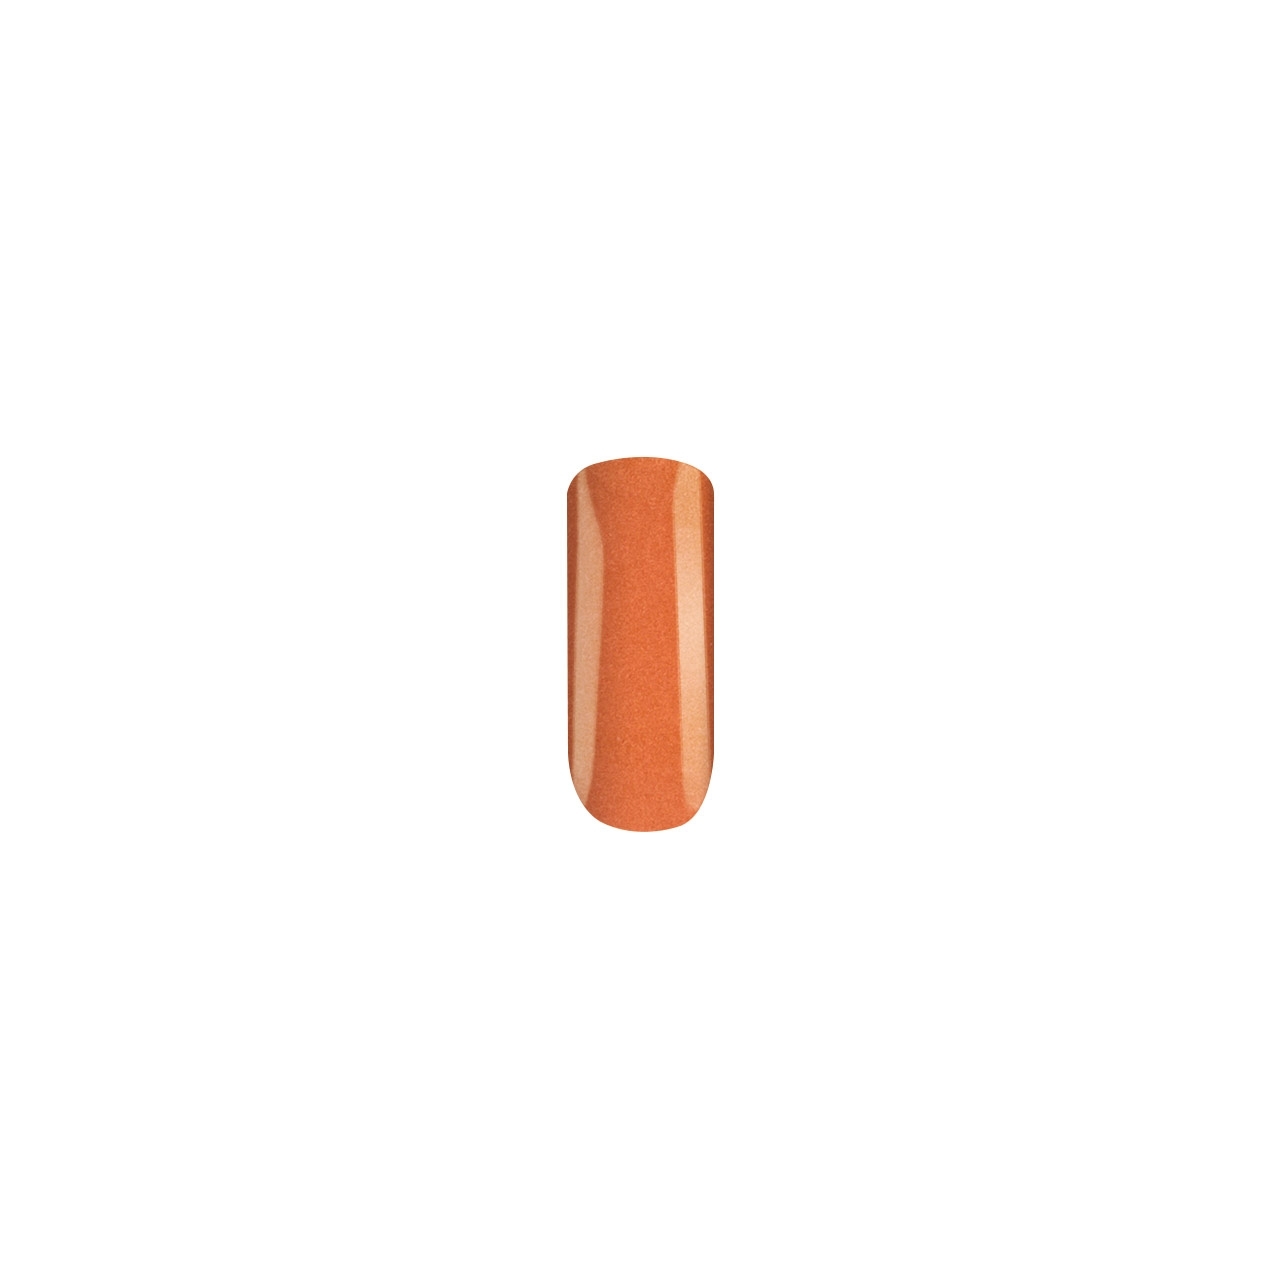 BAEHR BEAUTY CONCEPT - NAILS Nagellack sunkissed orange metallic 11 ml